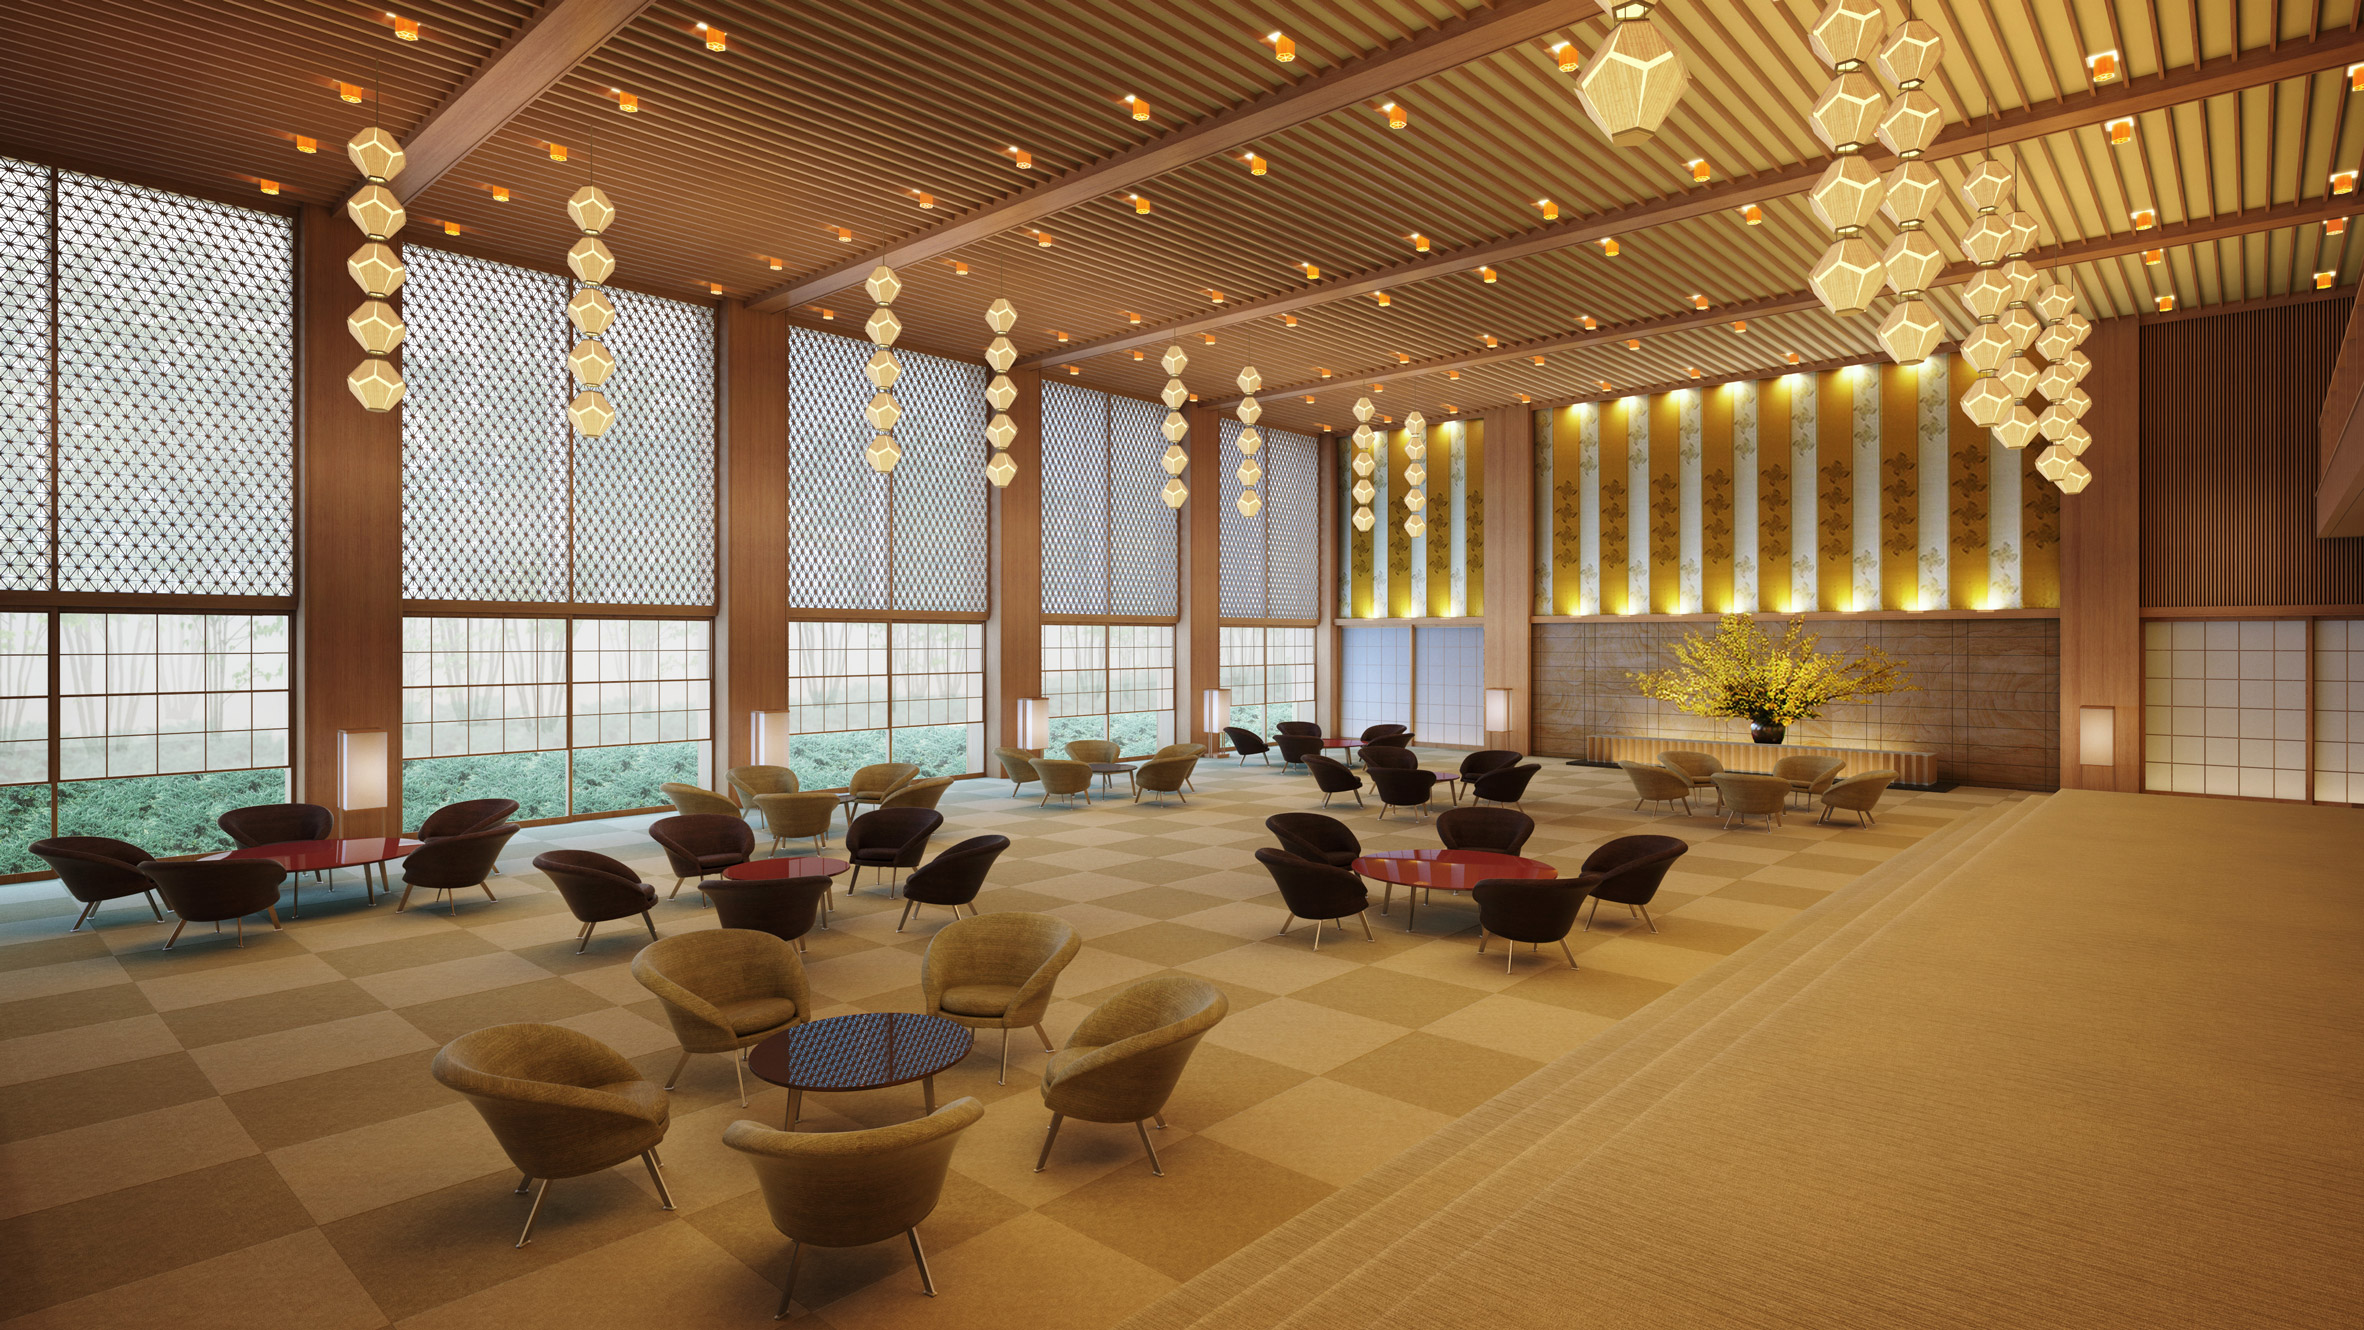 Tokyo S New Hotel Okura Will Recreate Iconic Rooms From The Original Dezeen